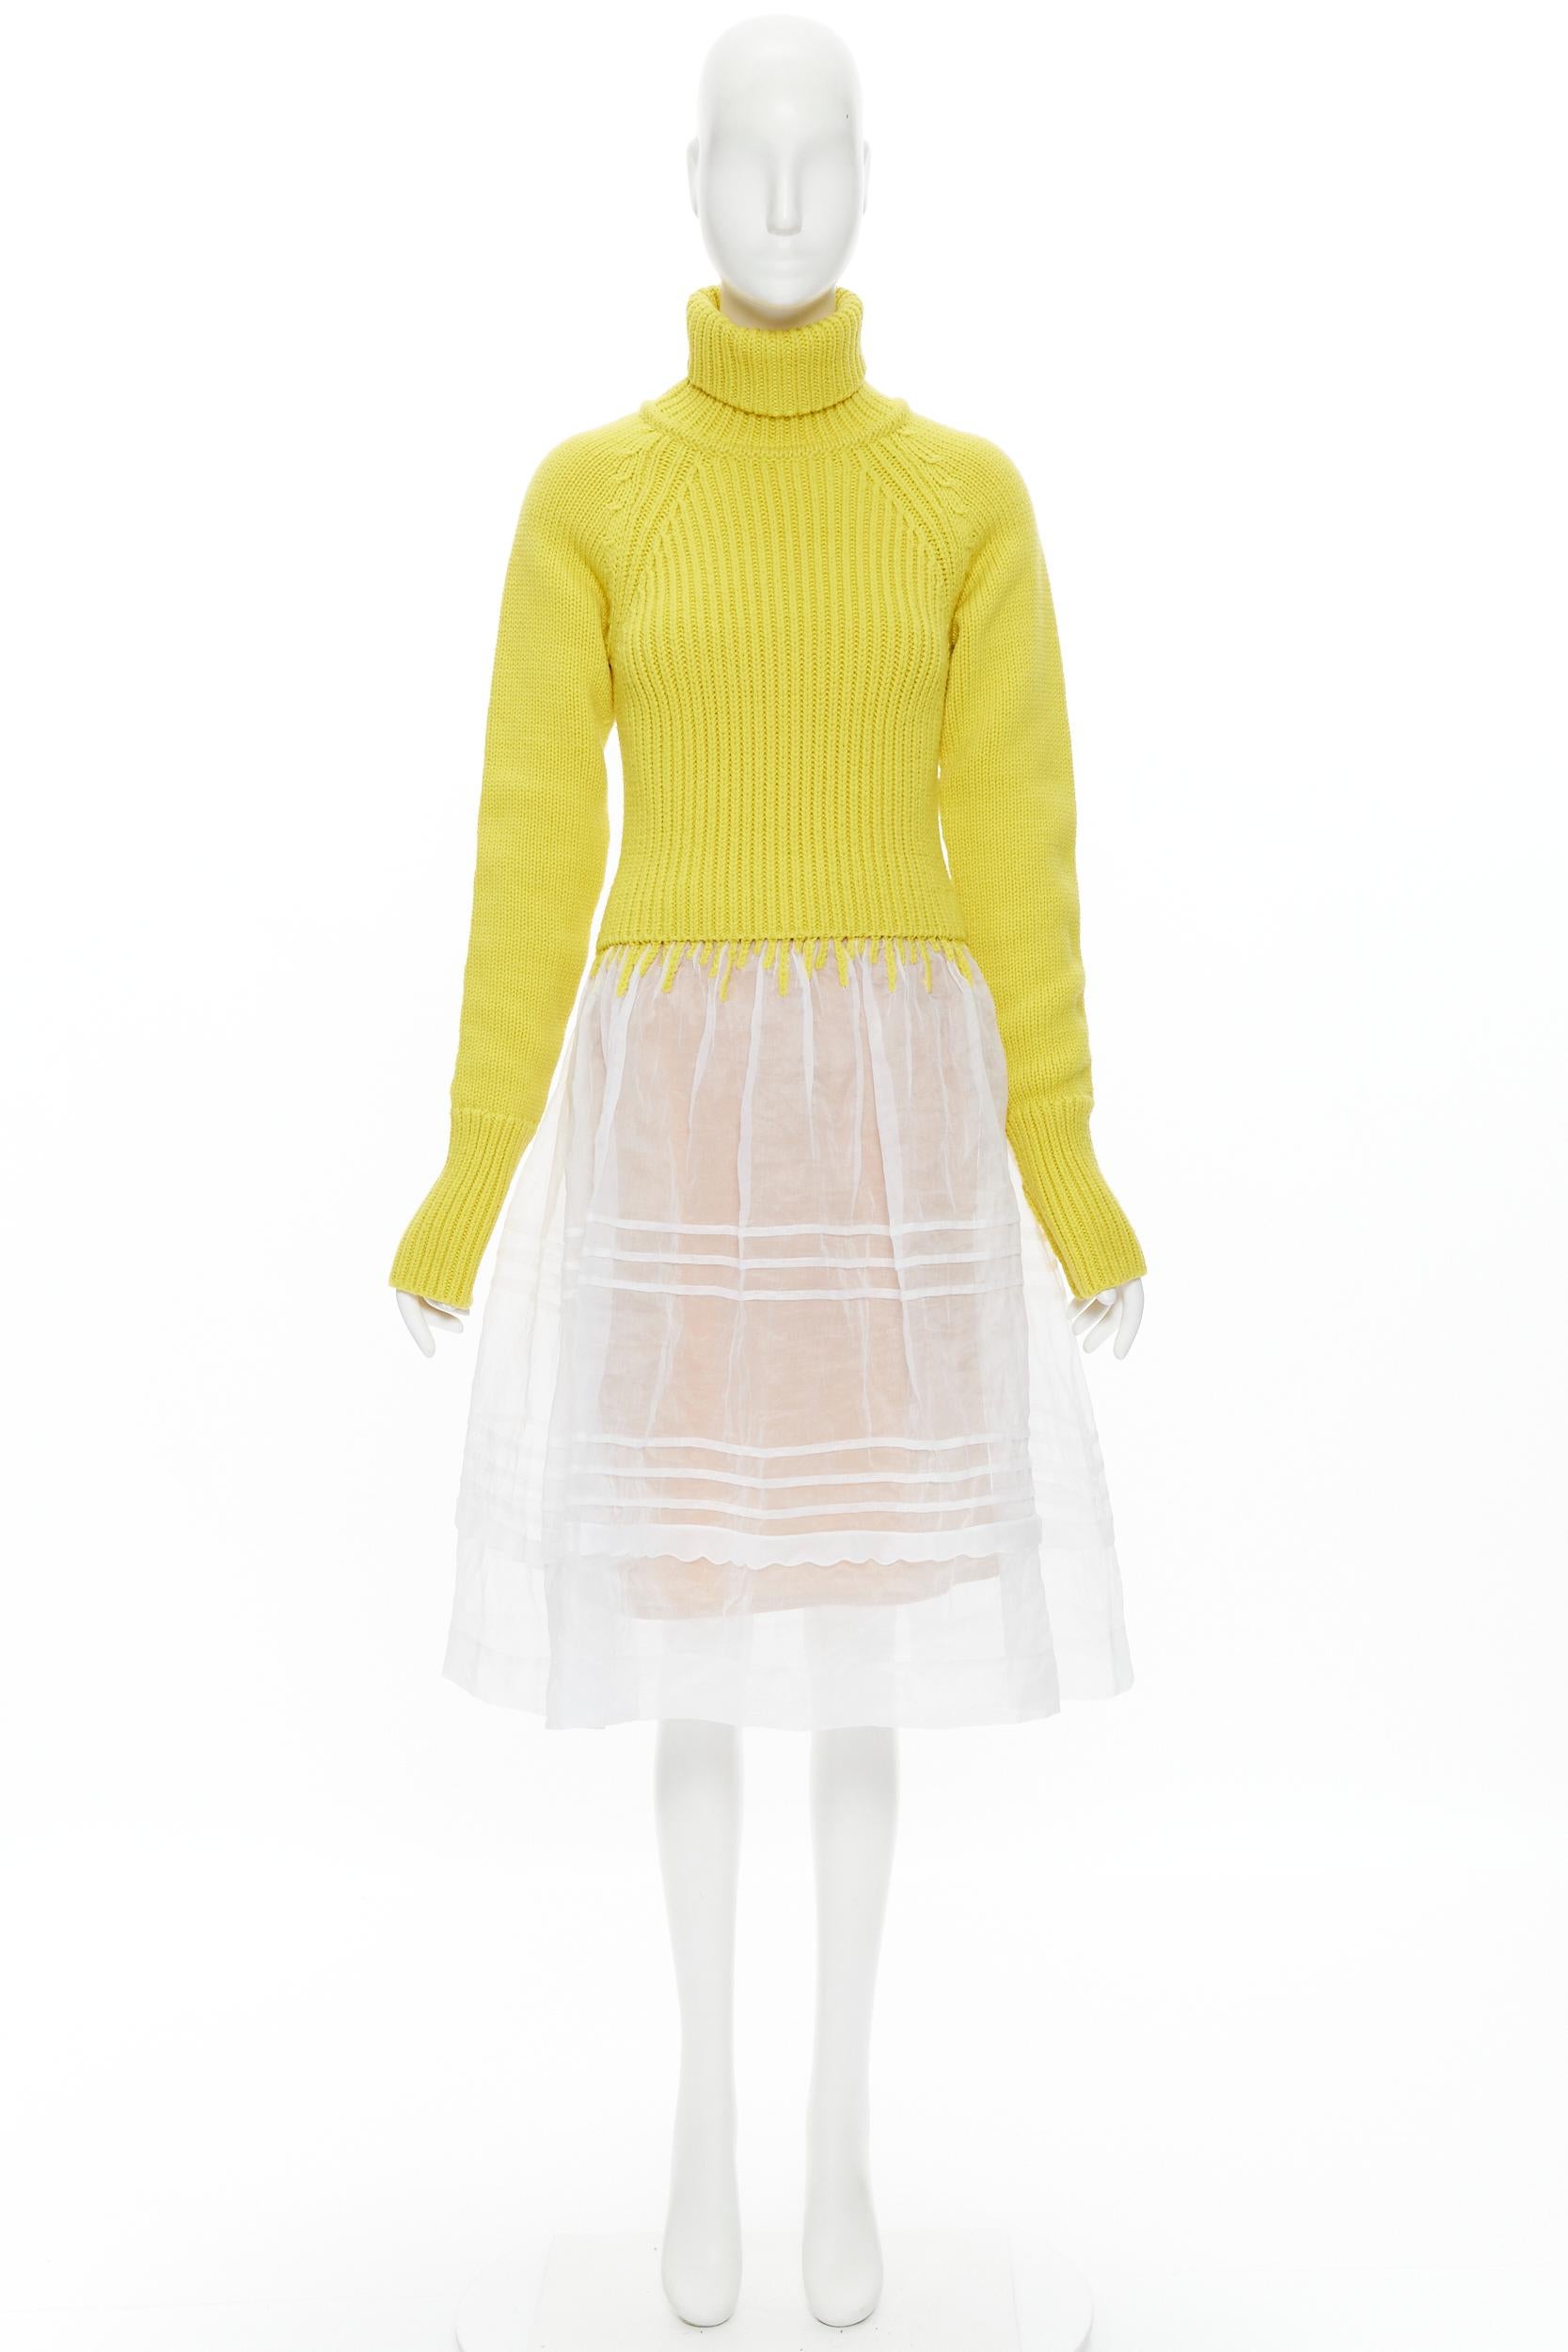 new LOEWE yellow wool chunky knit turtleneck sweater sheer skirt dress M 2